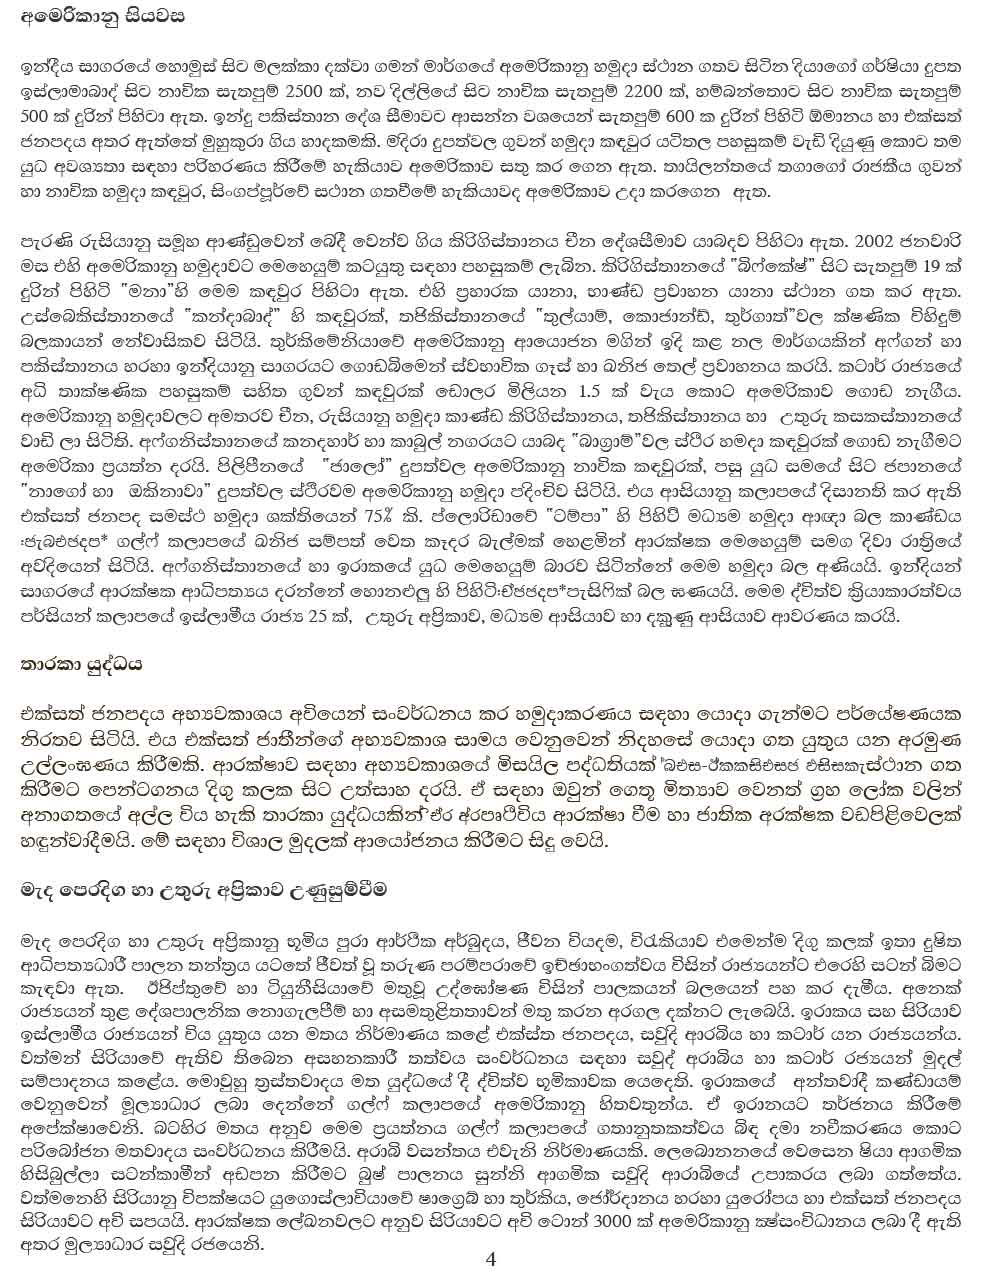 SLAS Pass Paper 09 by Anusha Gokula - General Knowledge in Sinhala 